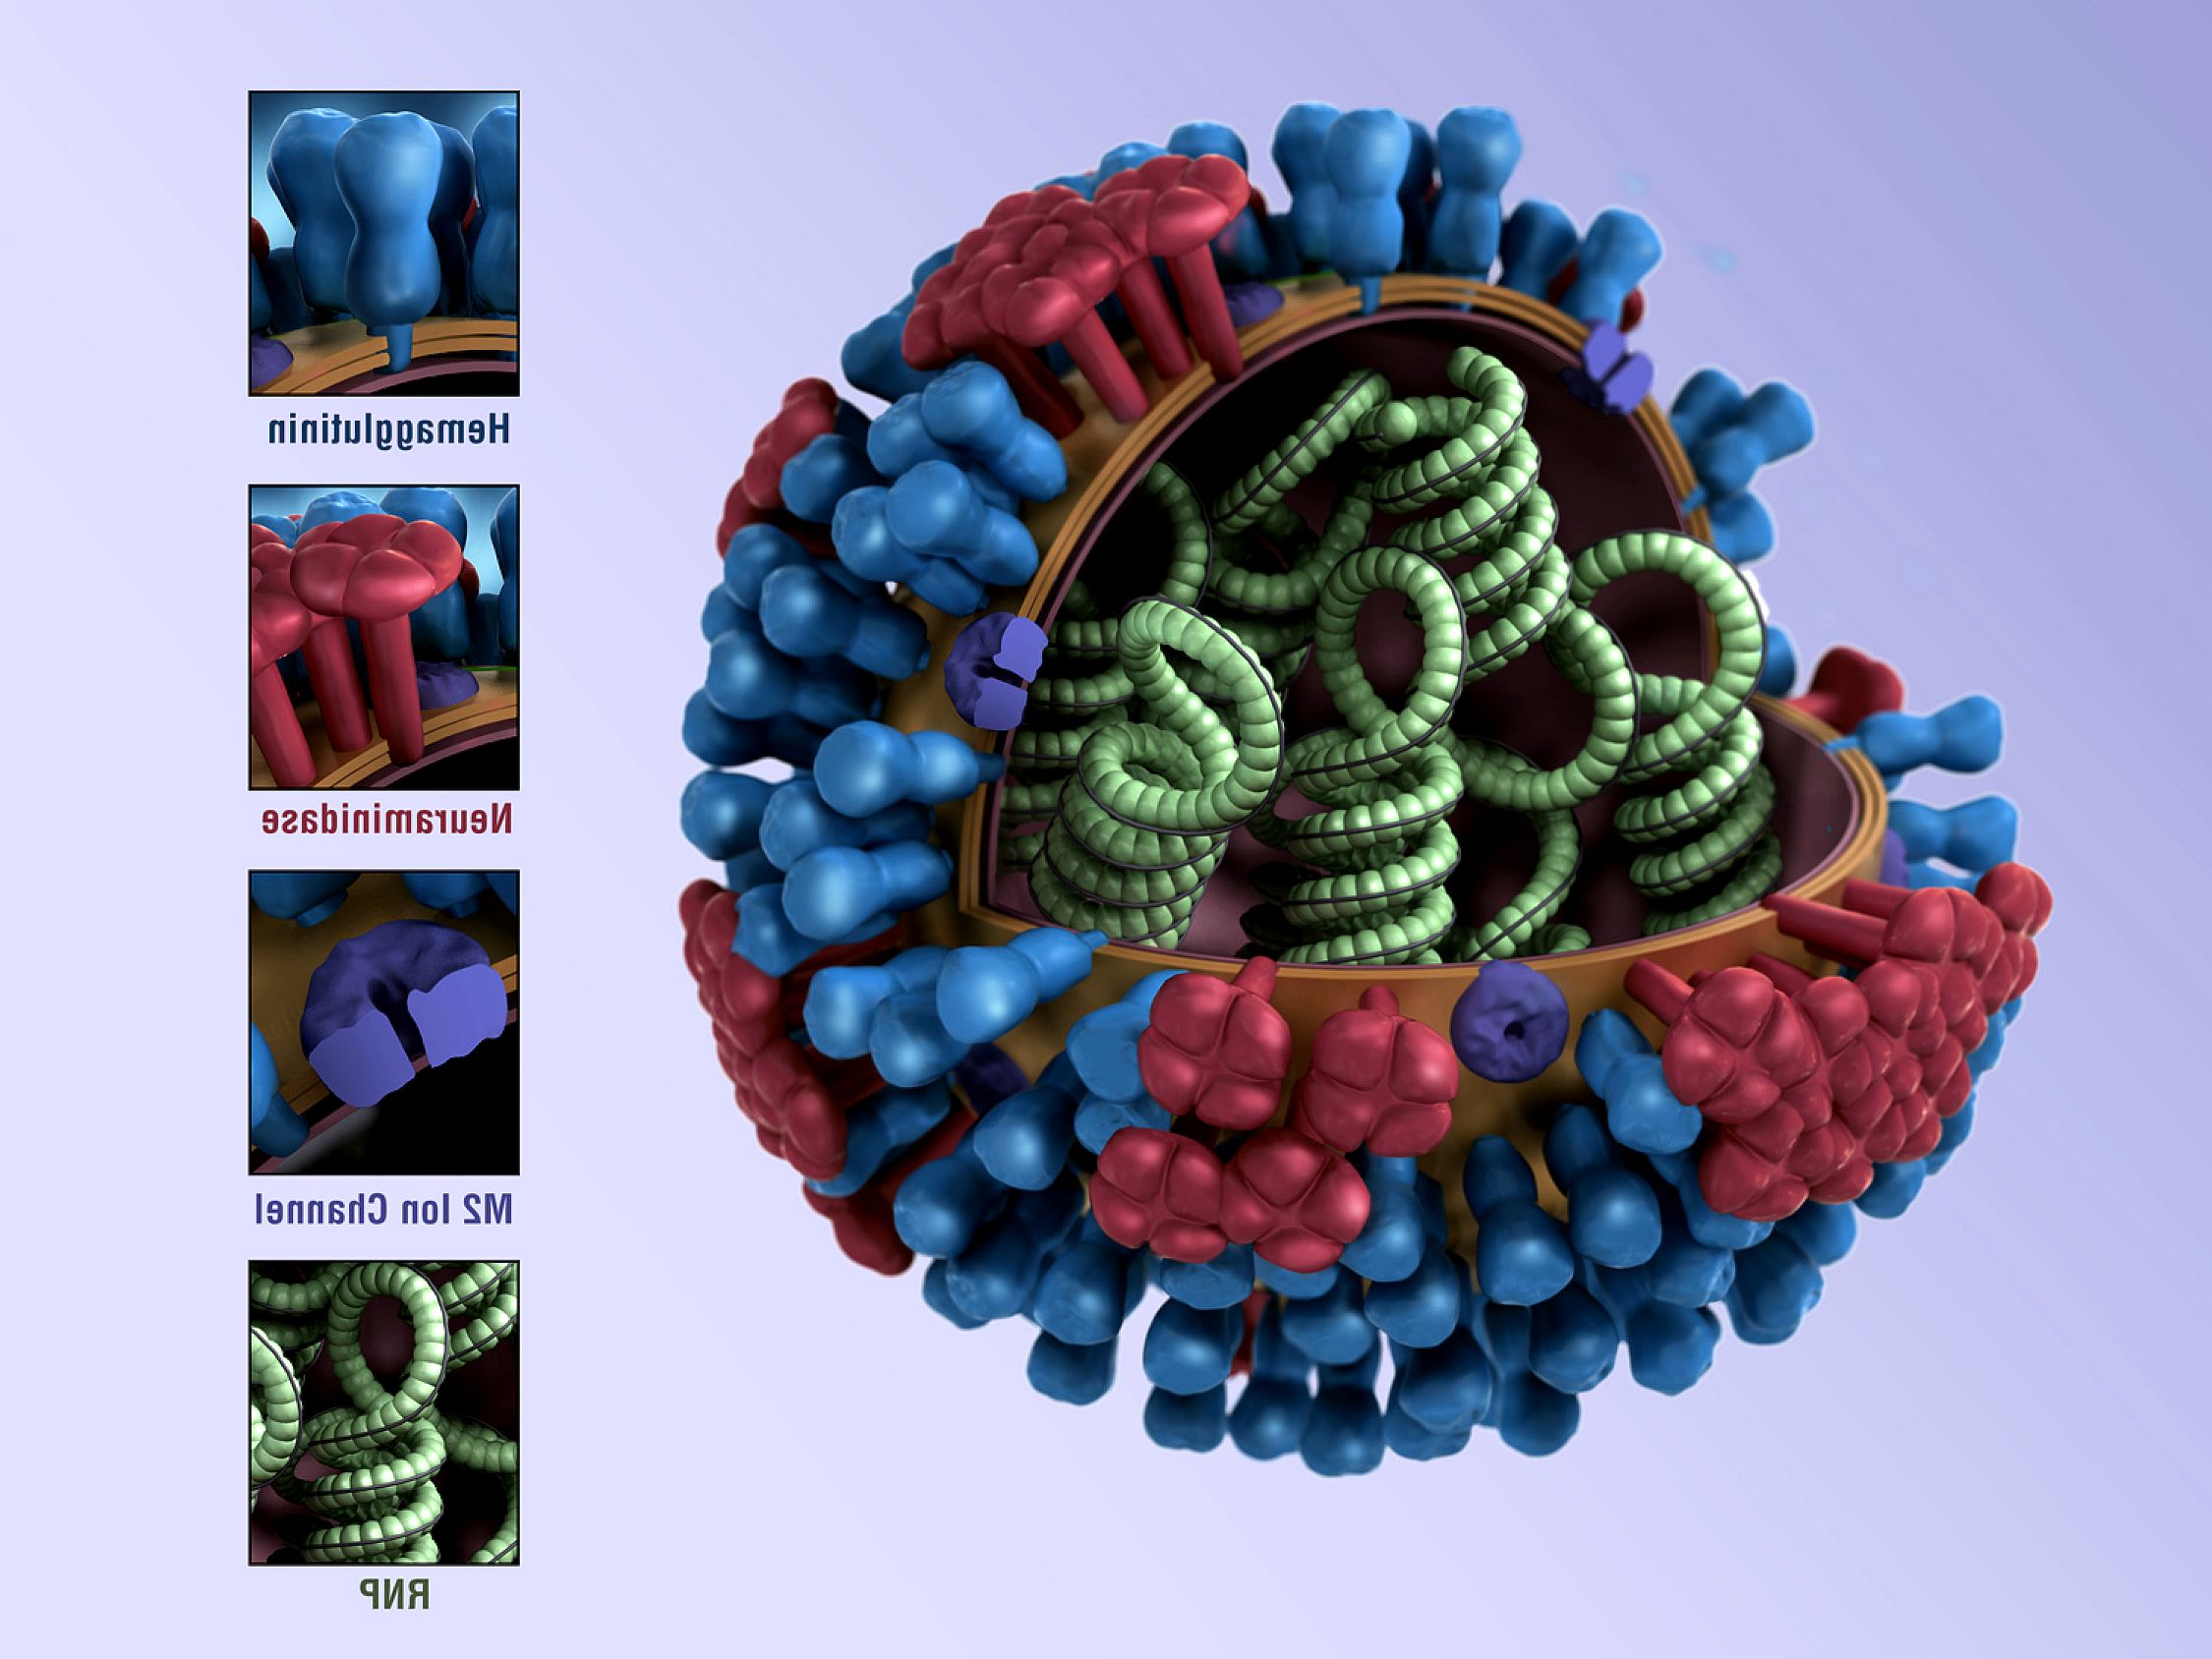 Геном гриппа. Модель вируса гриппа h1n1. Схематическая структура вируса гриппа. Макет вируса гриппа. Вирус гриппа картинка.